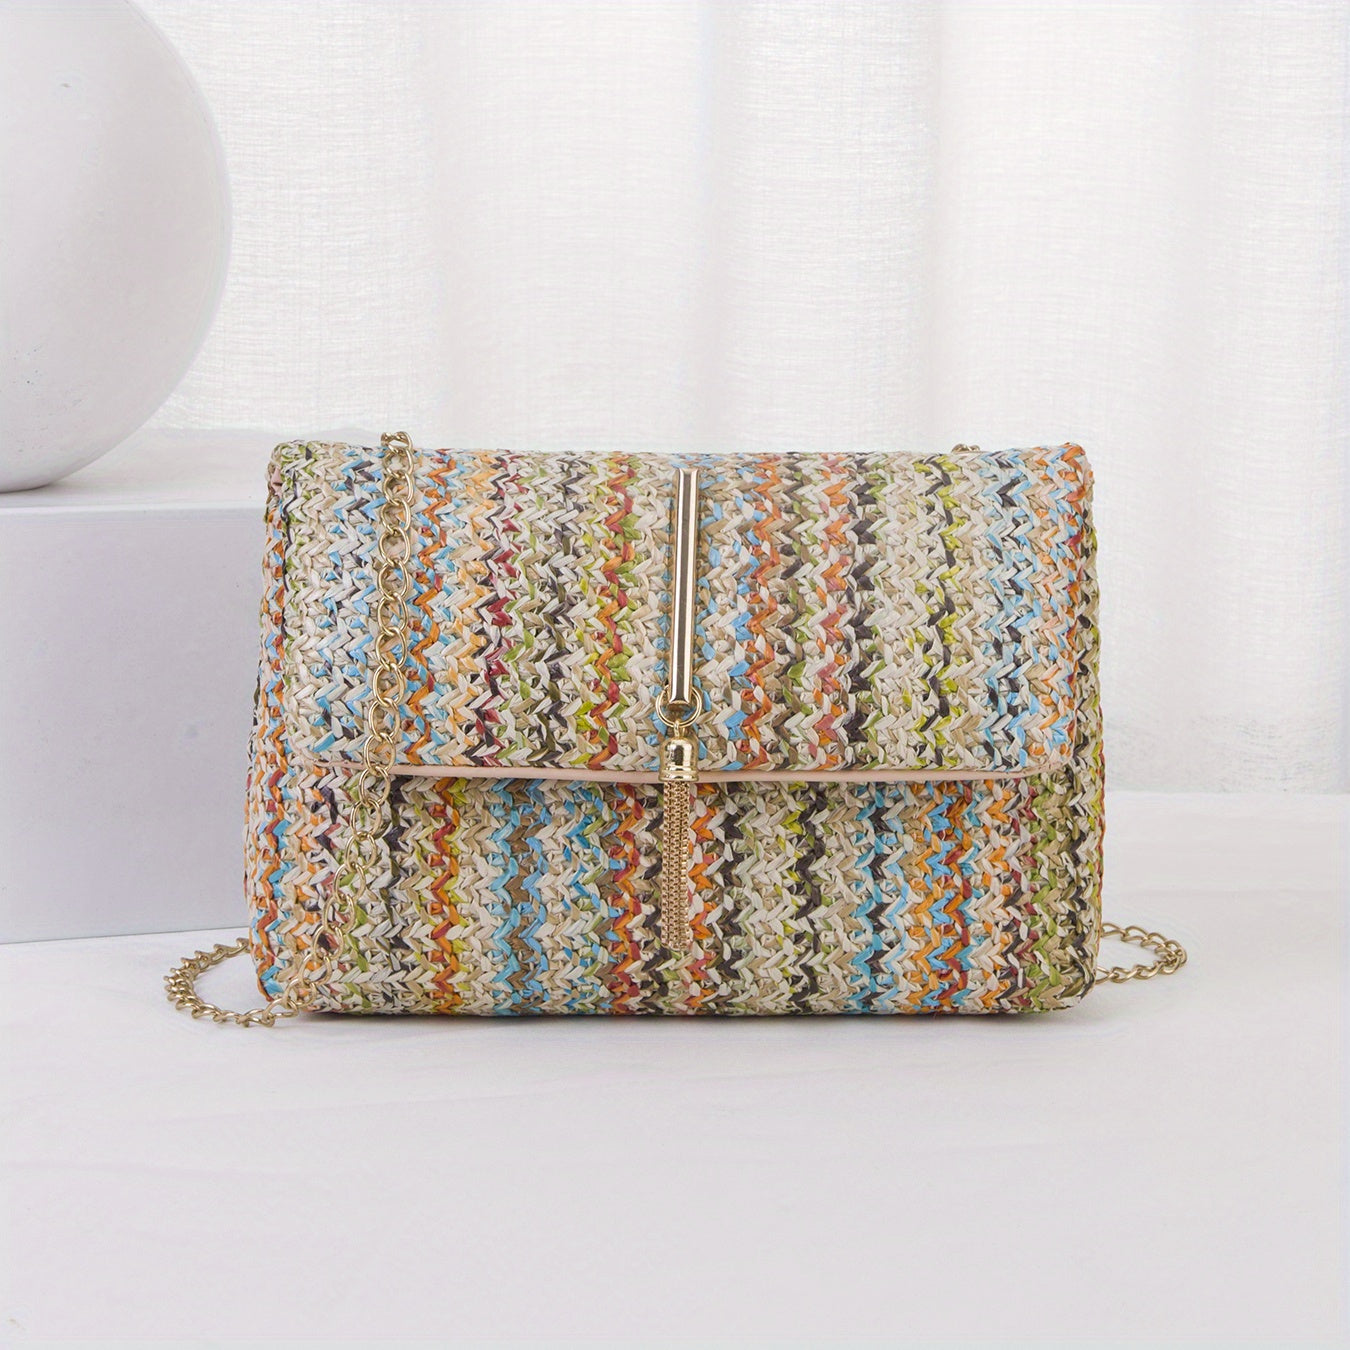 Rainbow Color Woven Shoulder Bag - Colorful Flap Stylish Handbag & Purse